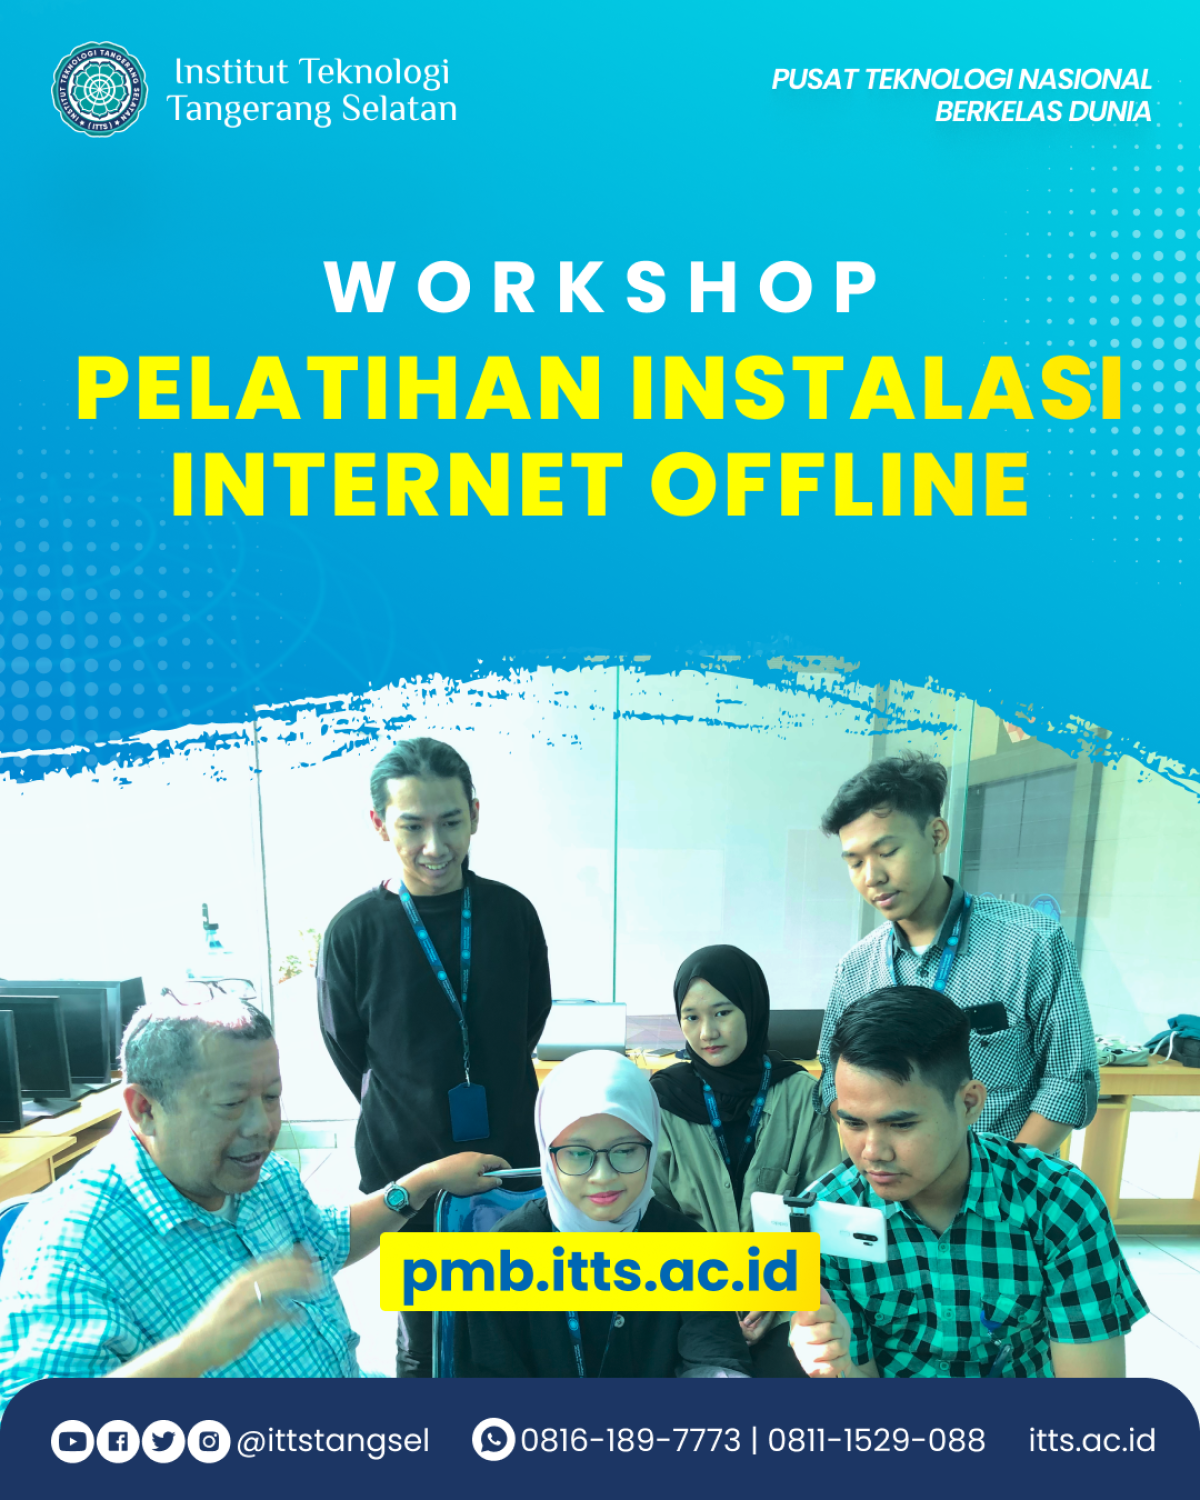 Workshop Pelatihan Instalasi Internet Offline Bersama Prof. Onno W. Purbo